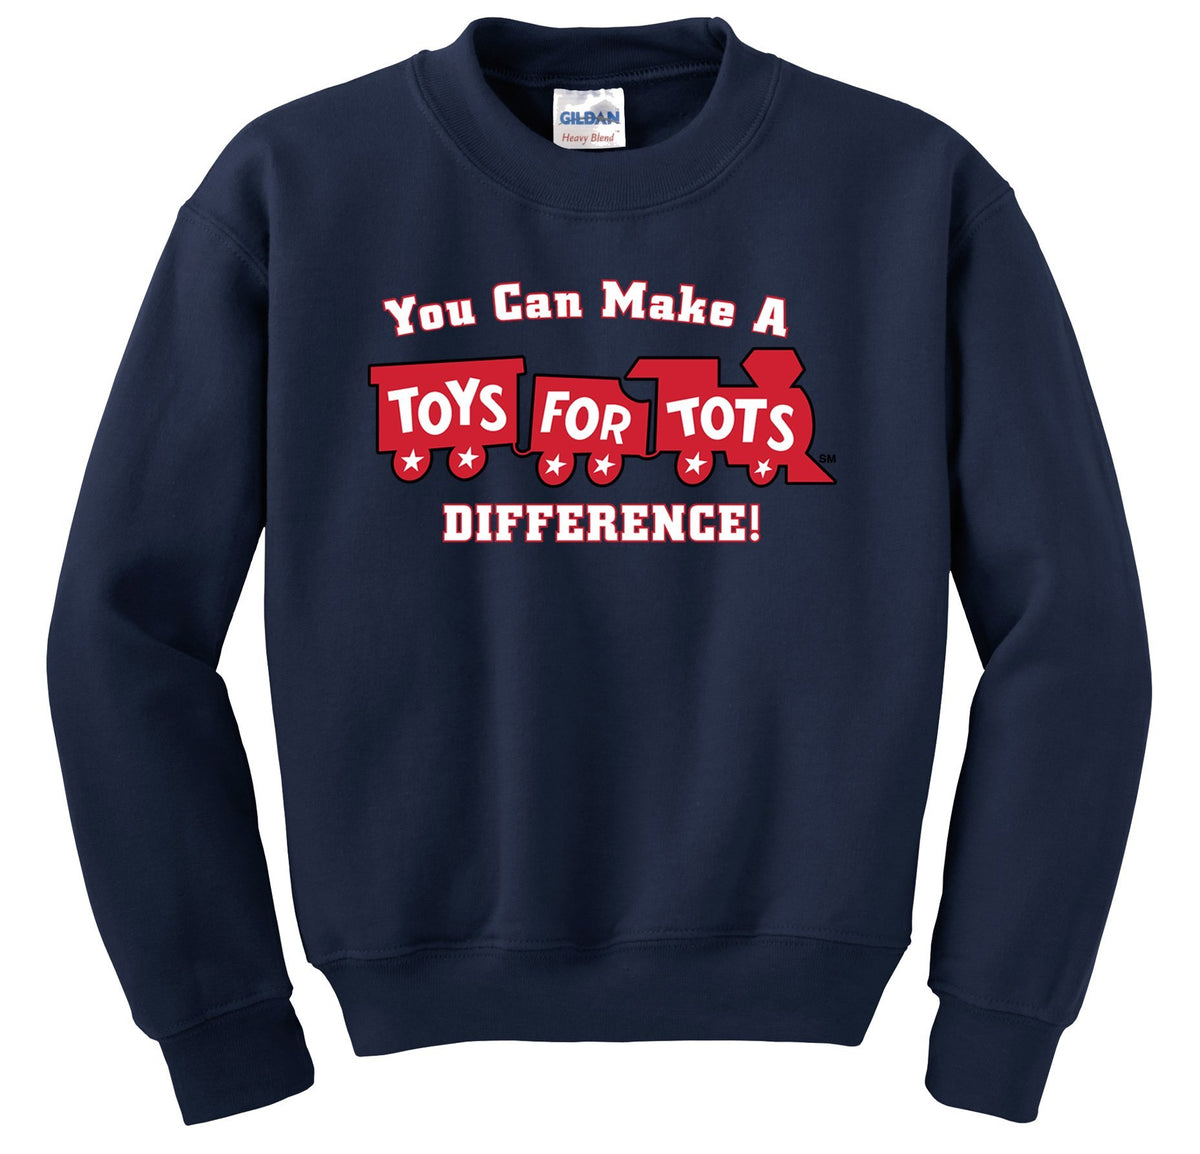 Make a Difference TFT Train Sweatshirt TFT Sweatshirt/hoodie marinecorpsdirecttft S NAVY 